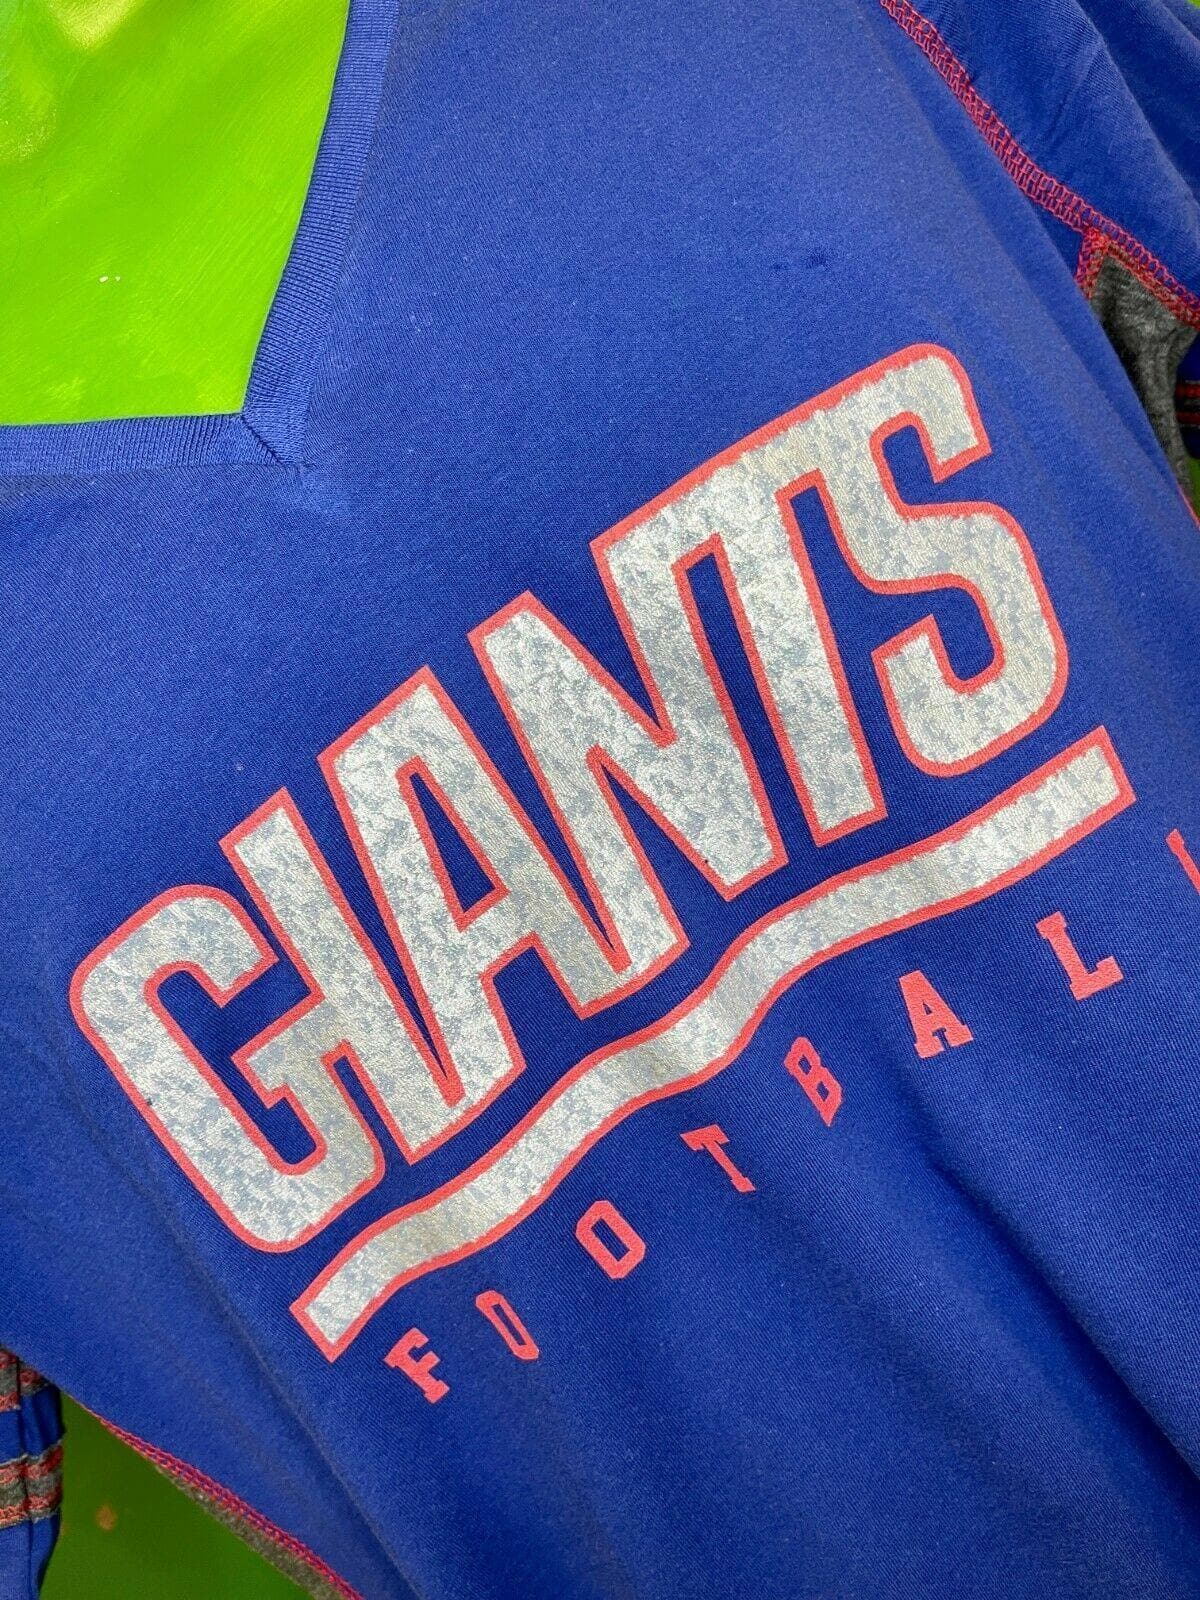 NFL New York Giants Majestic L-S Women's Large T-Shirt NWT